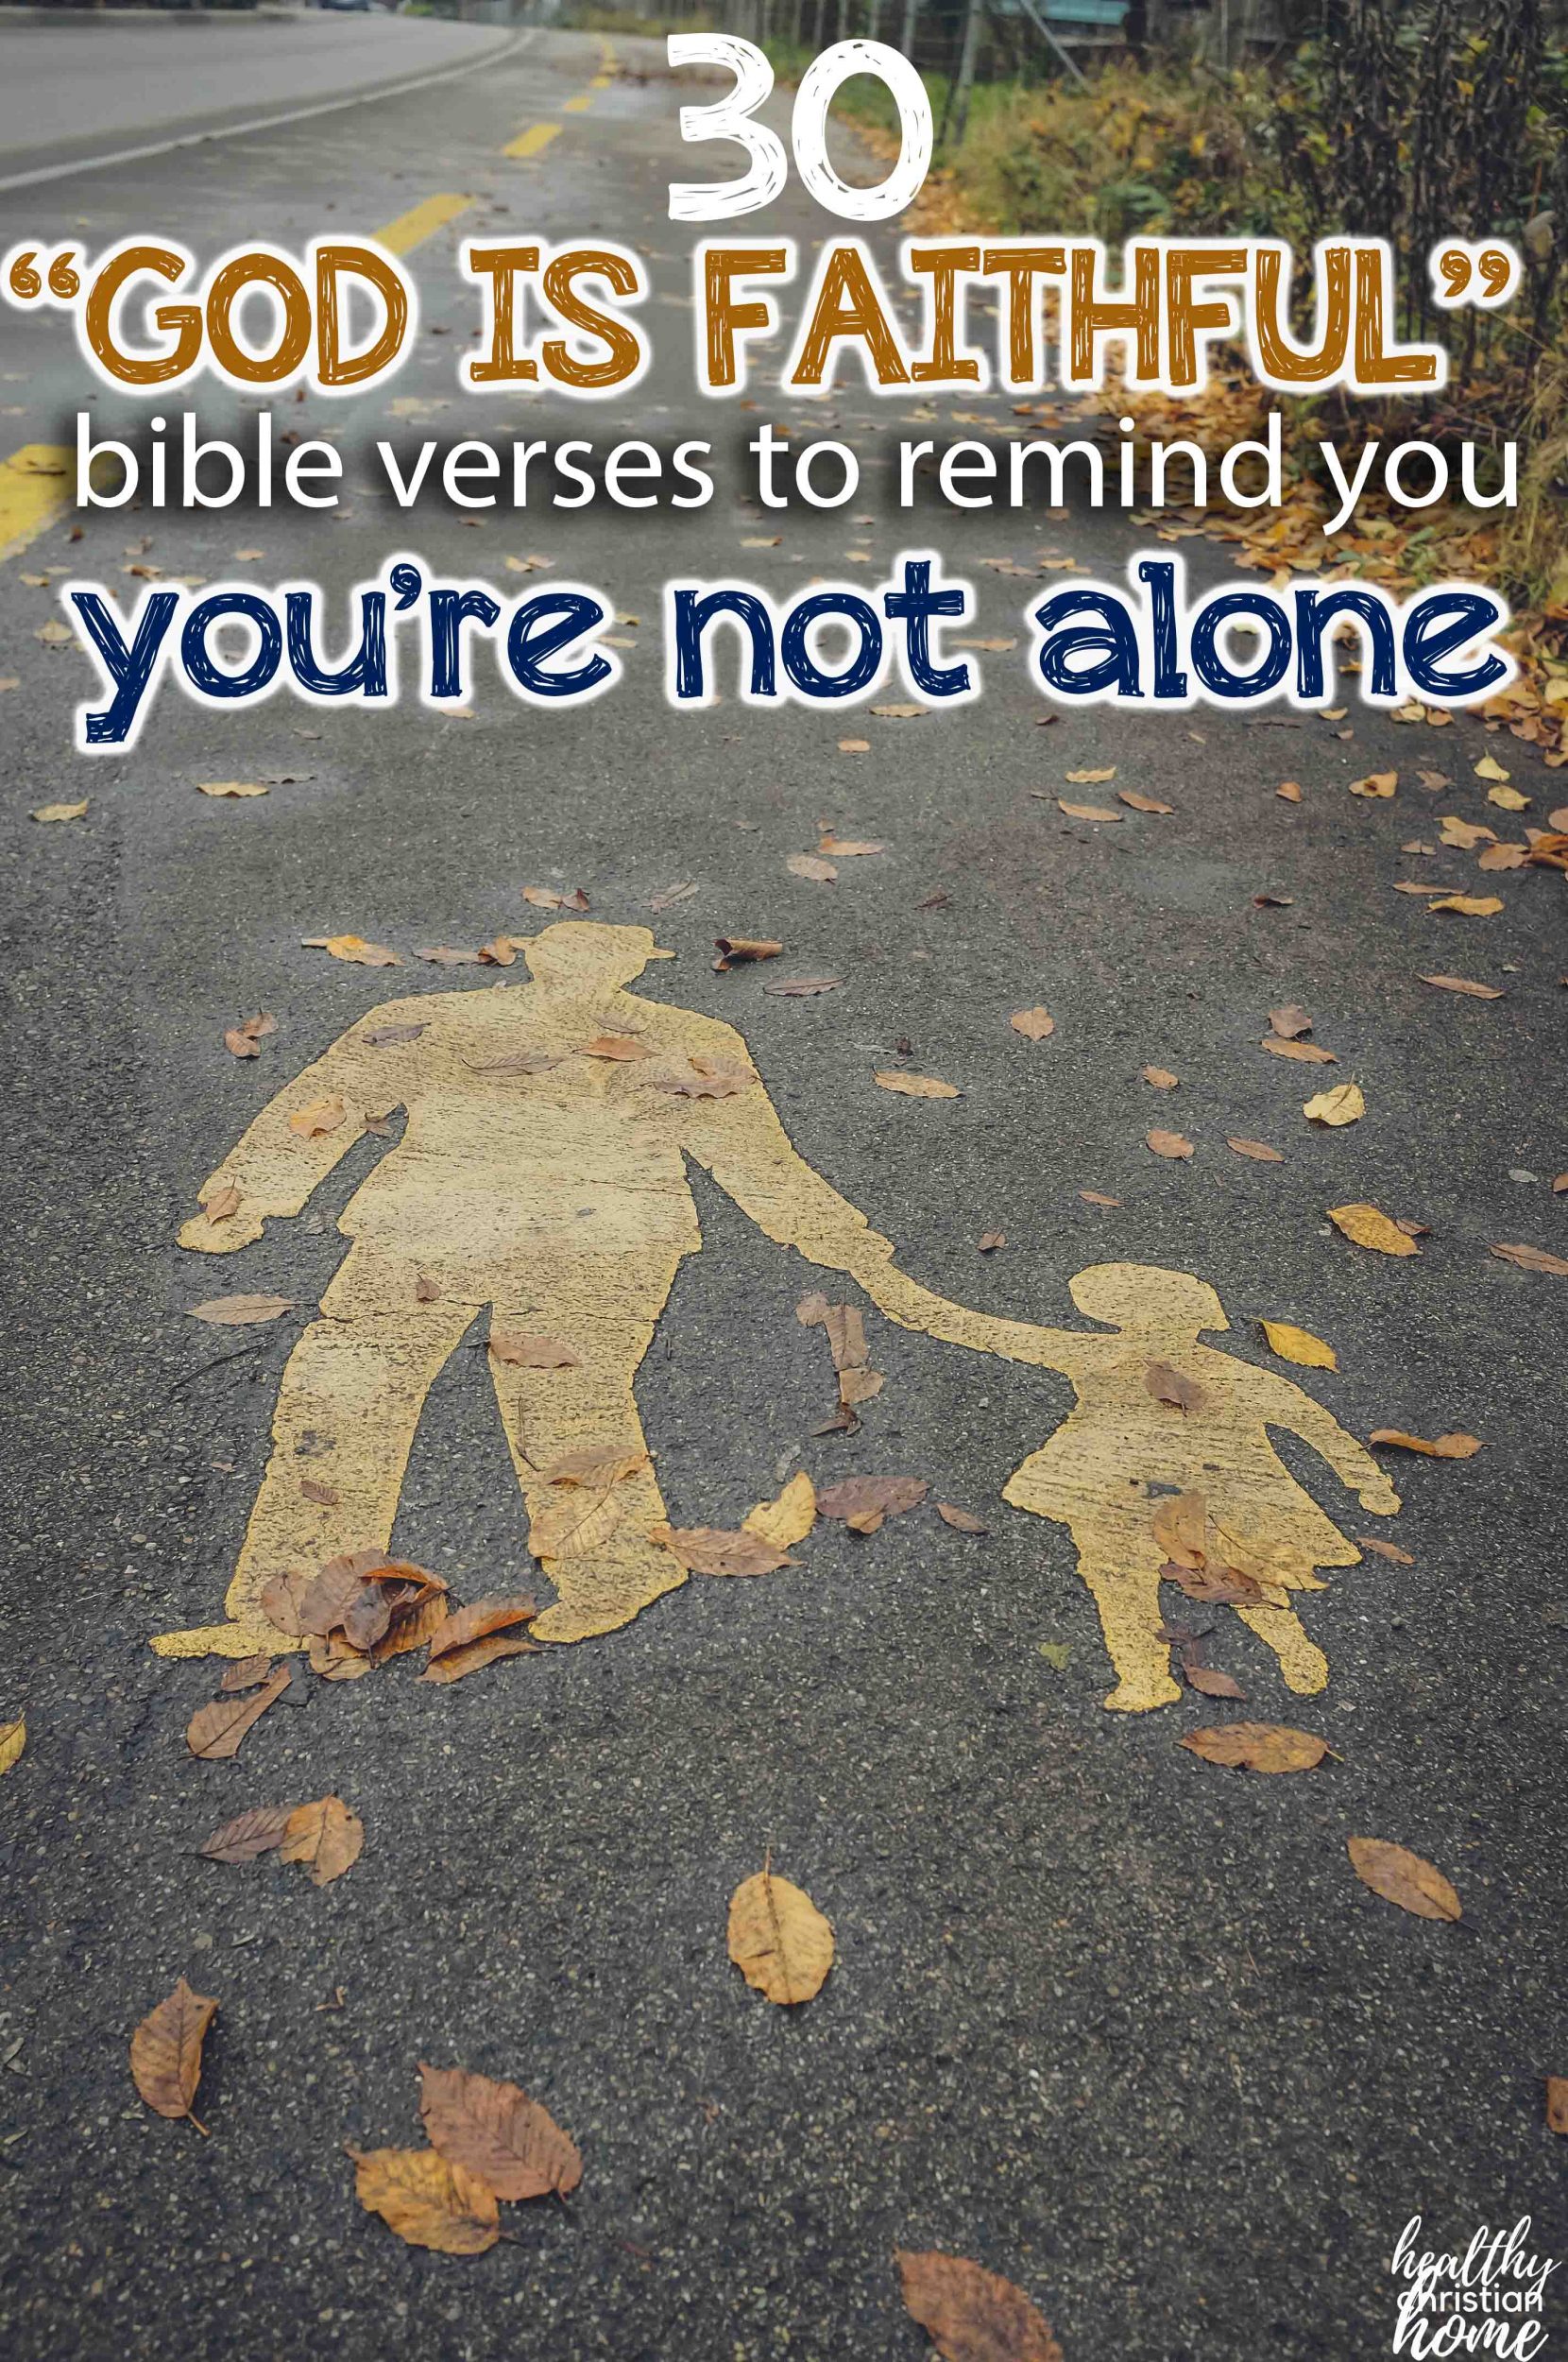 Walking across the street with text God is faithful.